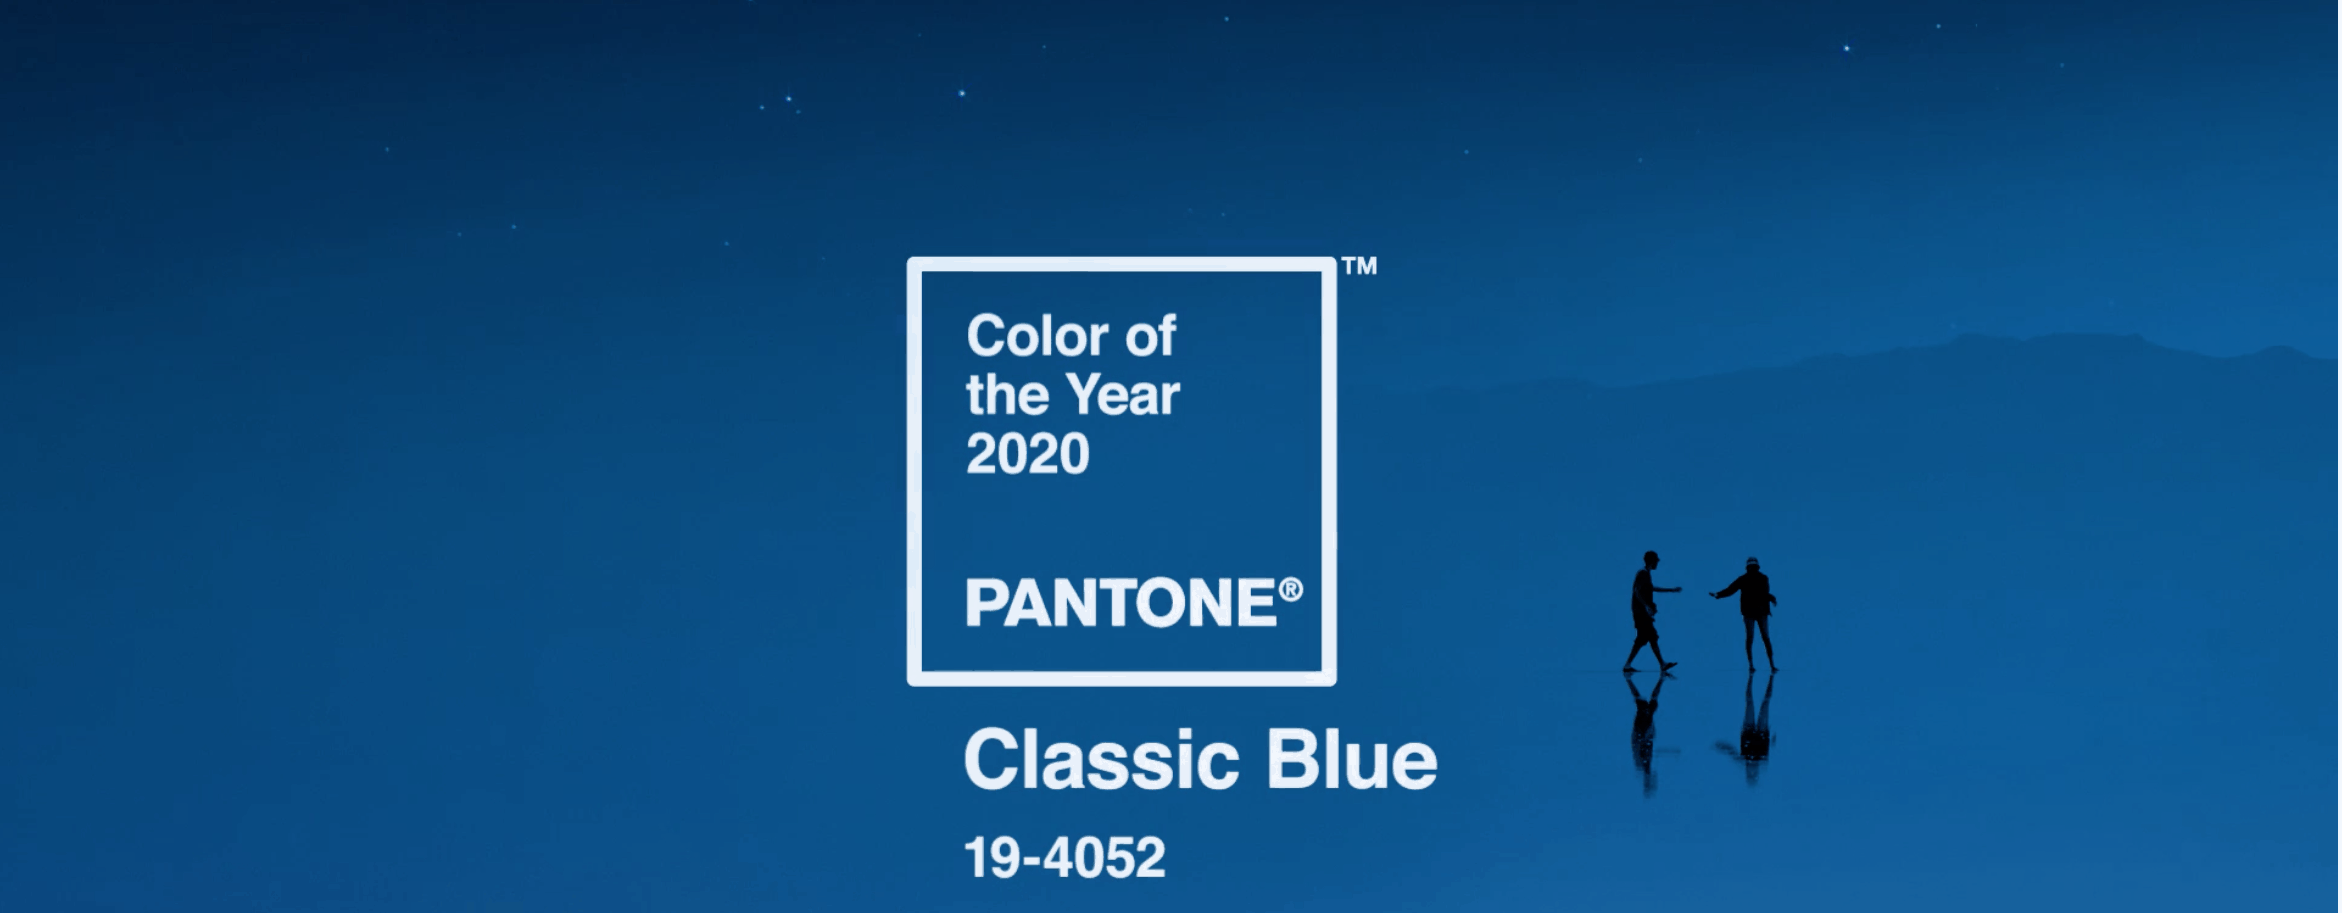 Pantone 2020 Color of The Year!. Desktop Image